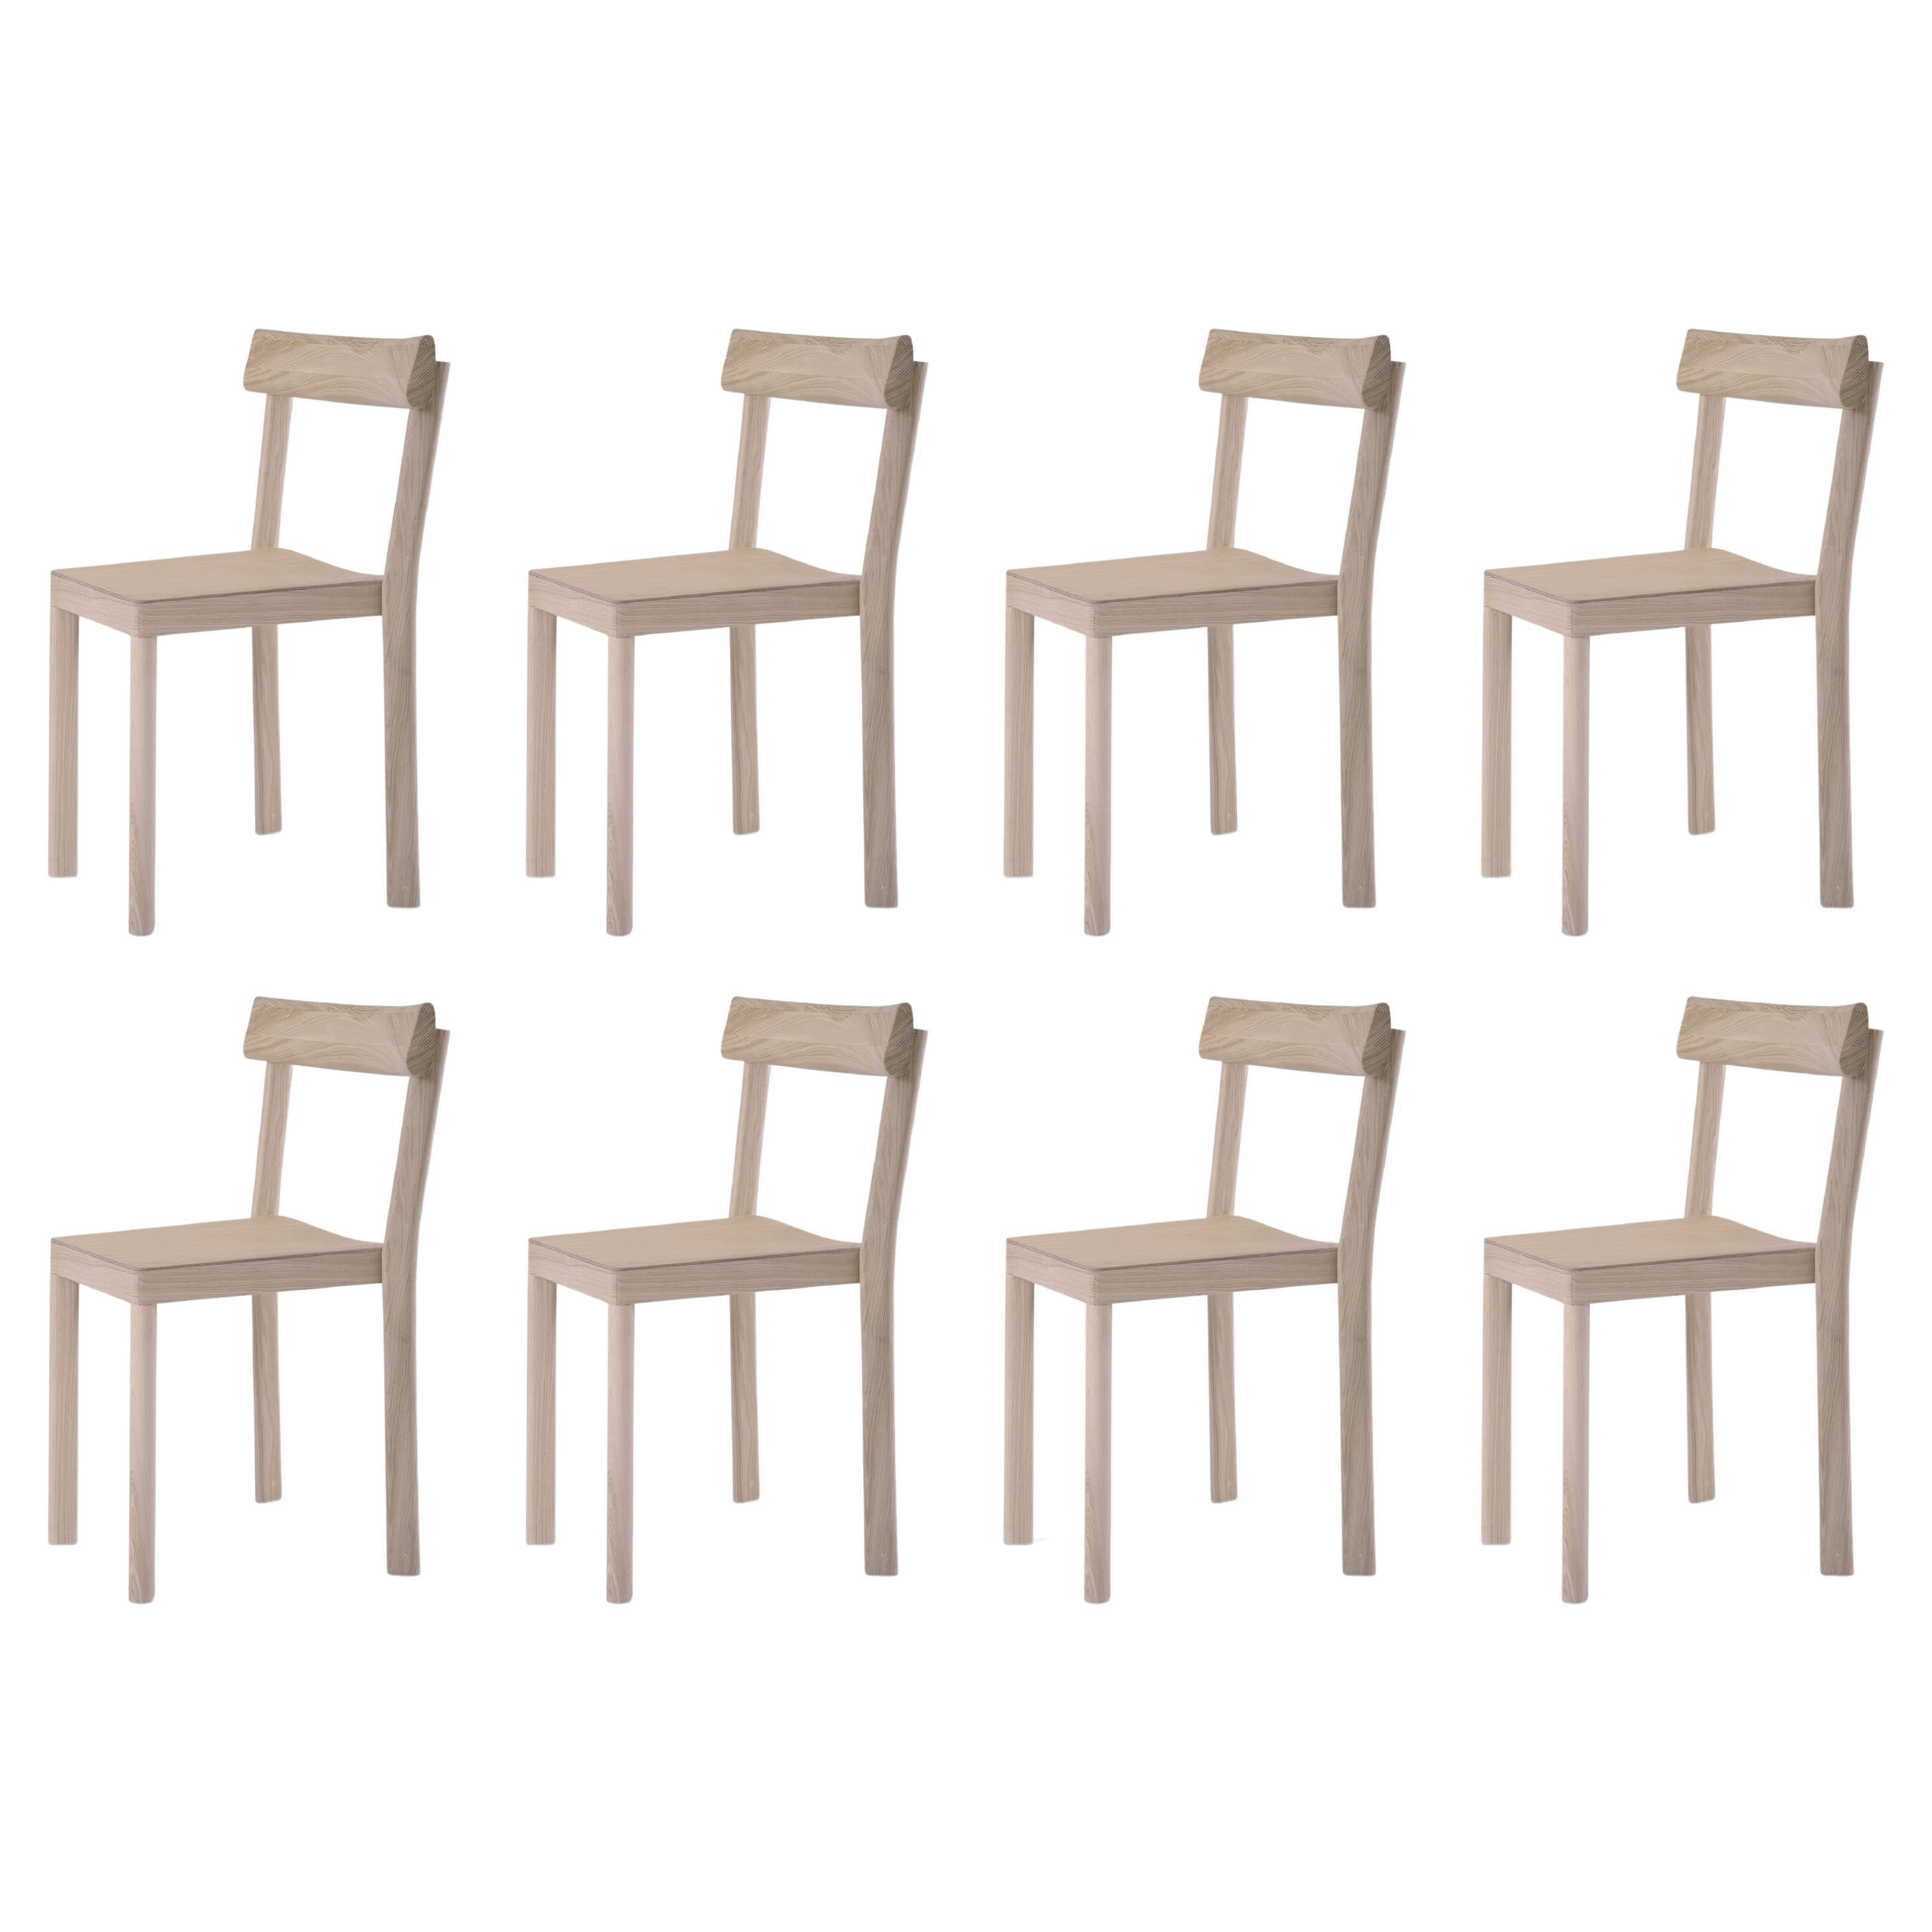 Set of 8 Galta Ash Chairs by Kann Design